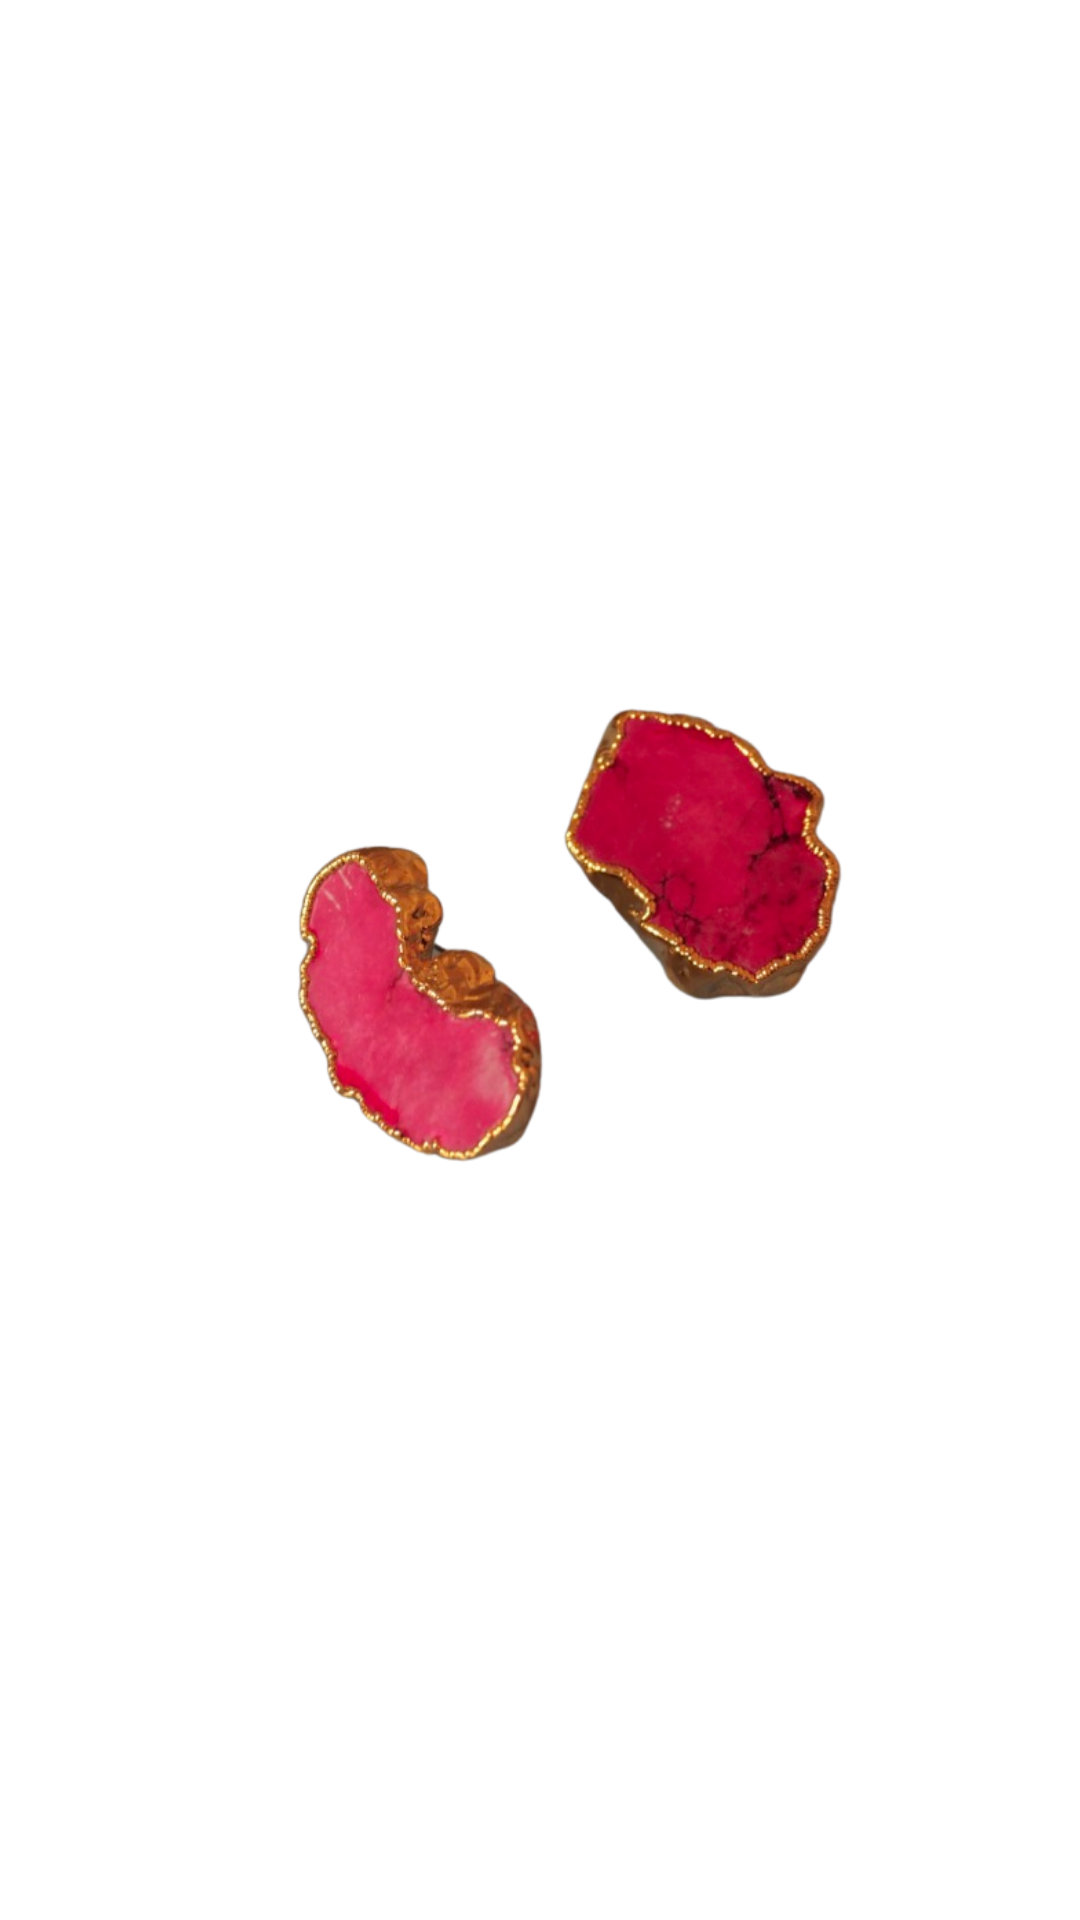 Passion fruit Earrings